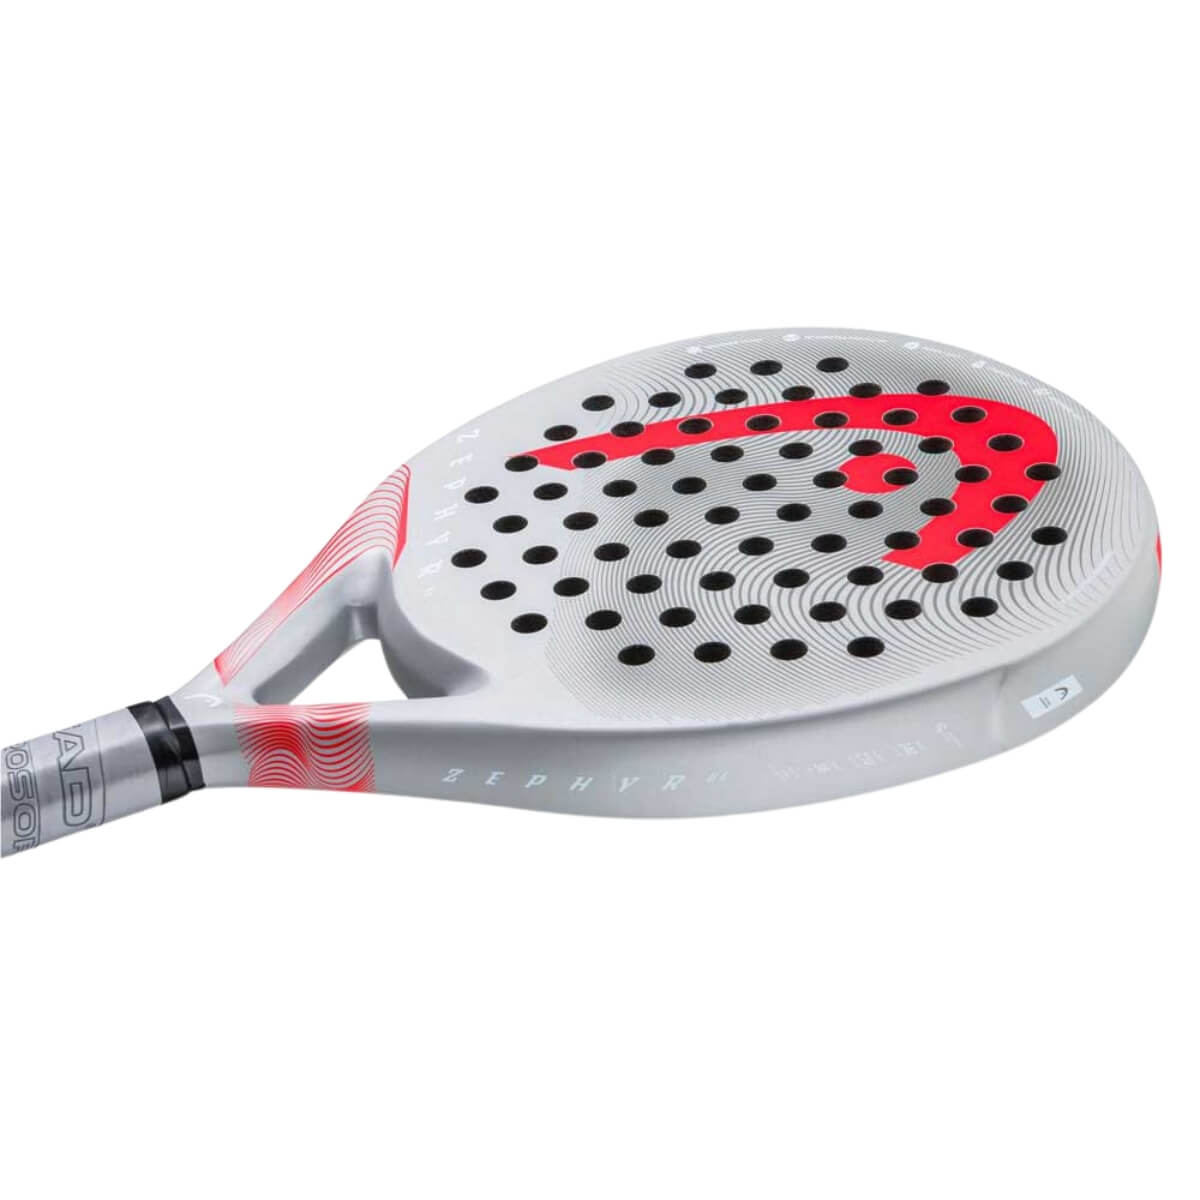 Head Zephur UL grey red padel racket tilt view